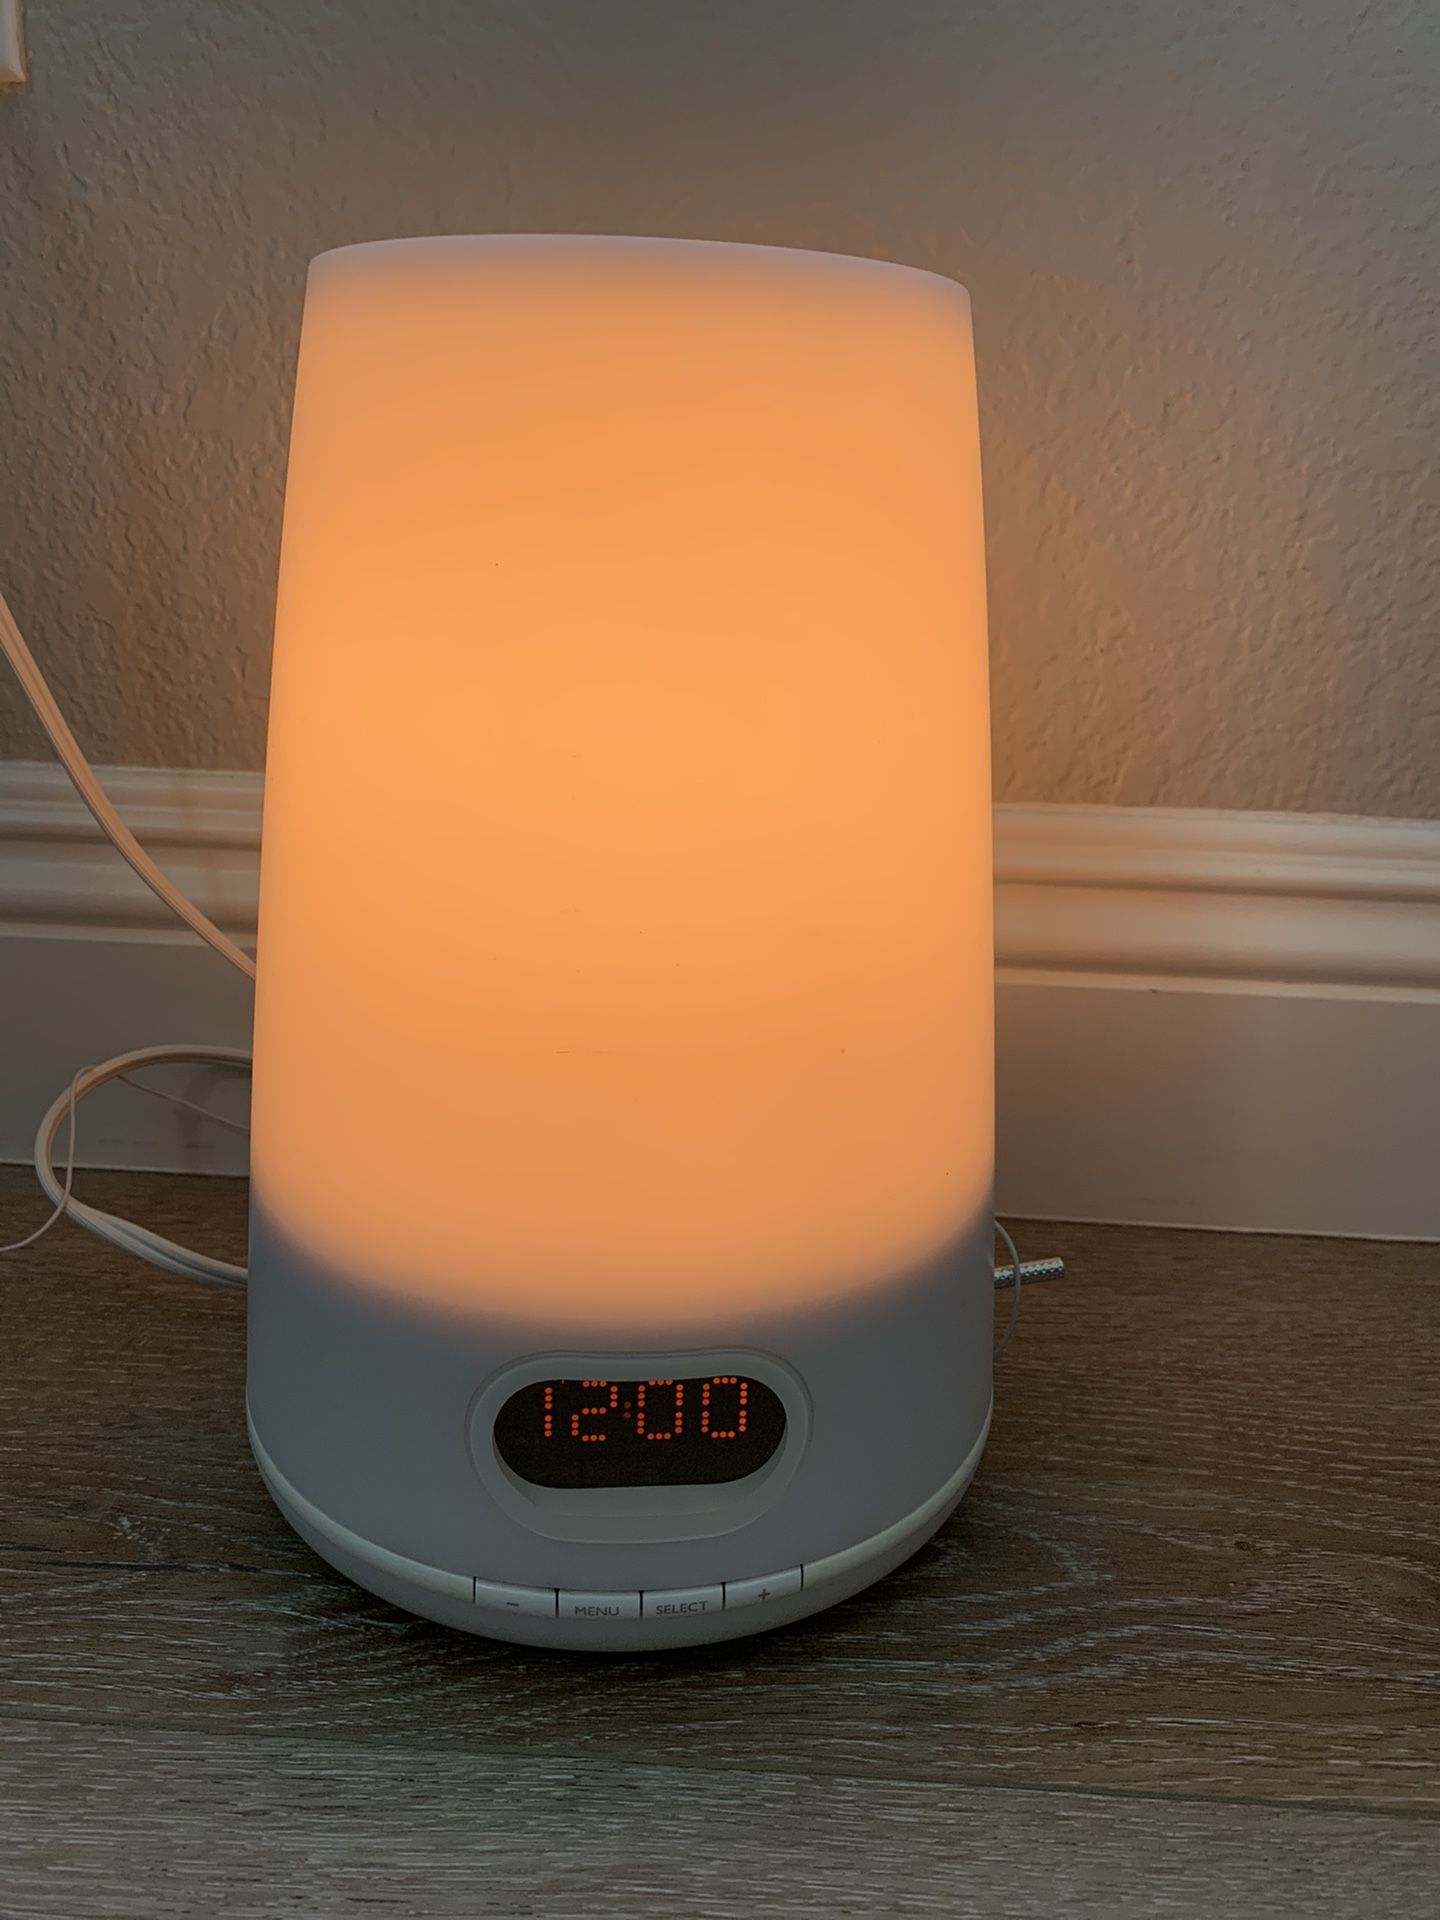 Phillips Wake-up Light Alarm